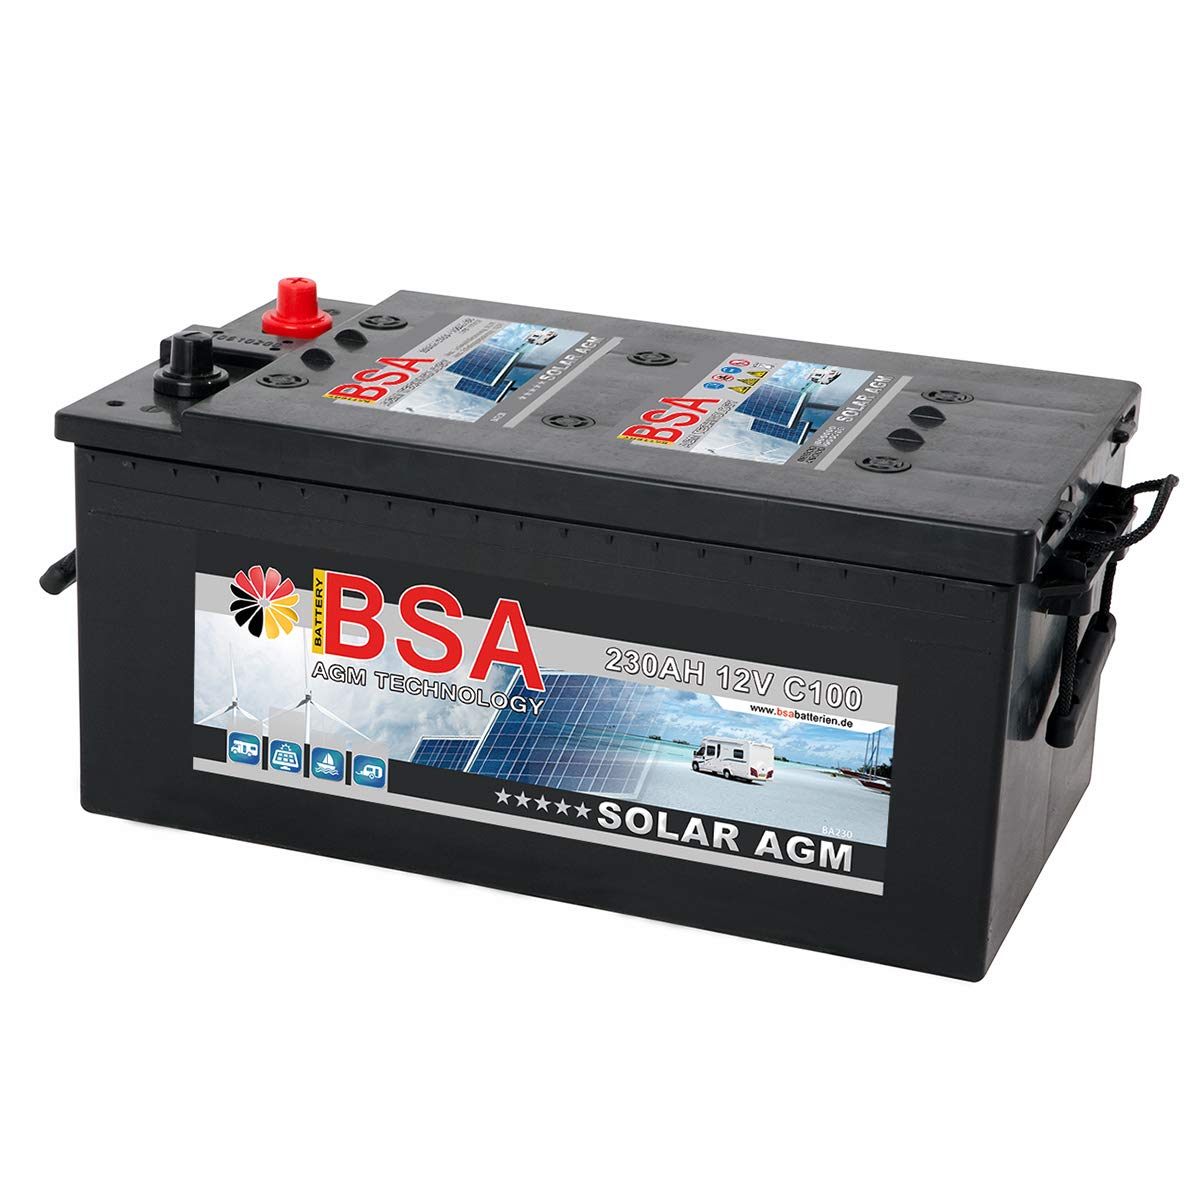 BSA Solarbatterie 12V 230Ah Solar Akku Wohnmobil Boot Schiff Versorgung AGM Gel Batterie von BSA BATTERY HIGH QUALITY BATTERIES